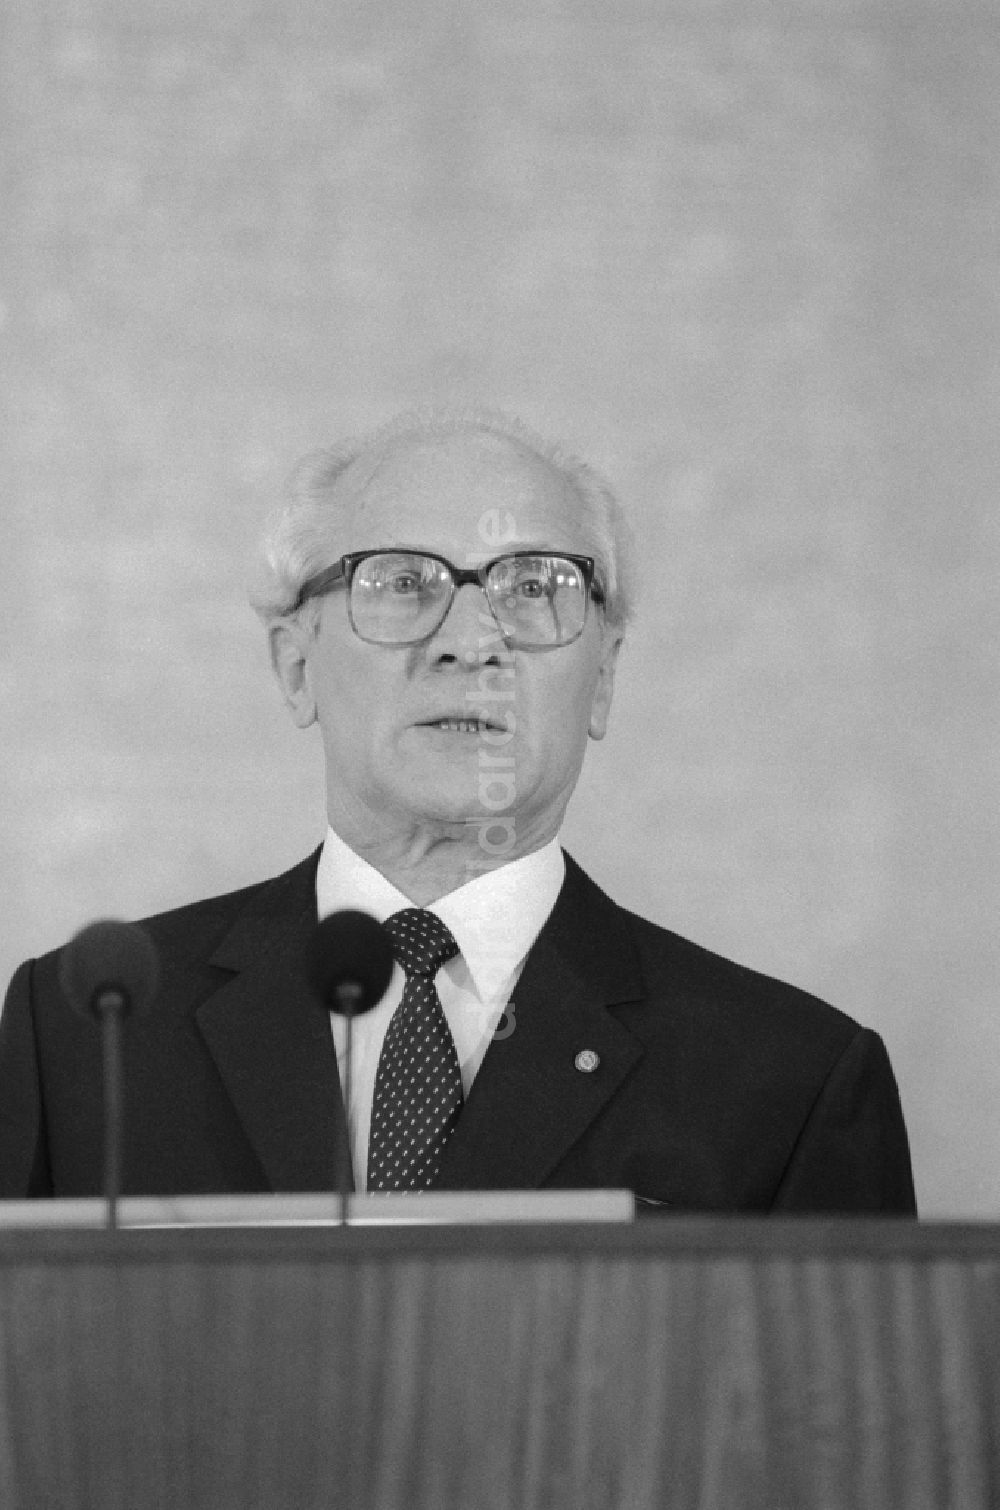 DDR-Bildarchiv: Berlin - Erich Honecker (1912 - 1994), Generalsekretär des Zentralkomitees (ZK) der SED, in Berlin, der ehemaligen Hauptstadt der DDR, Deutsche Demokratische Republik